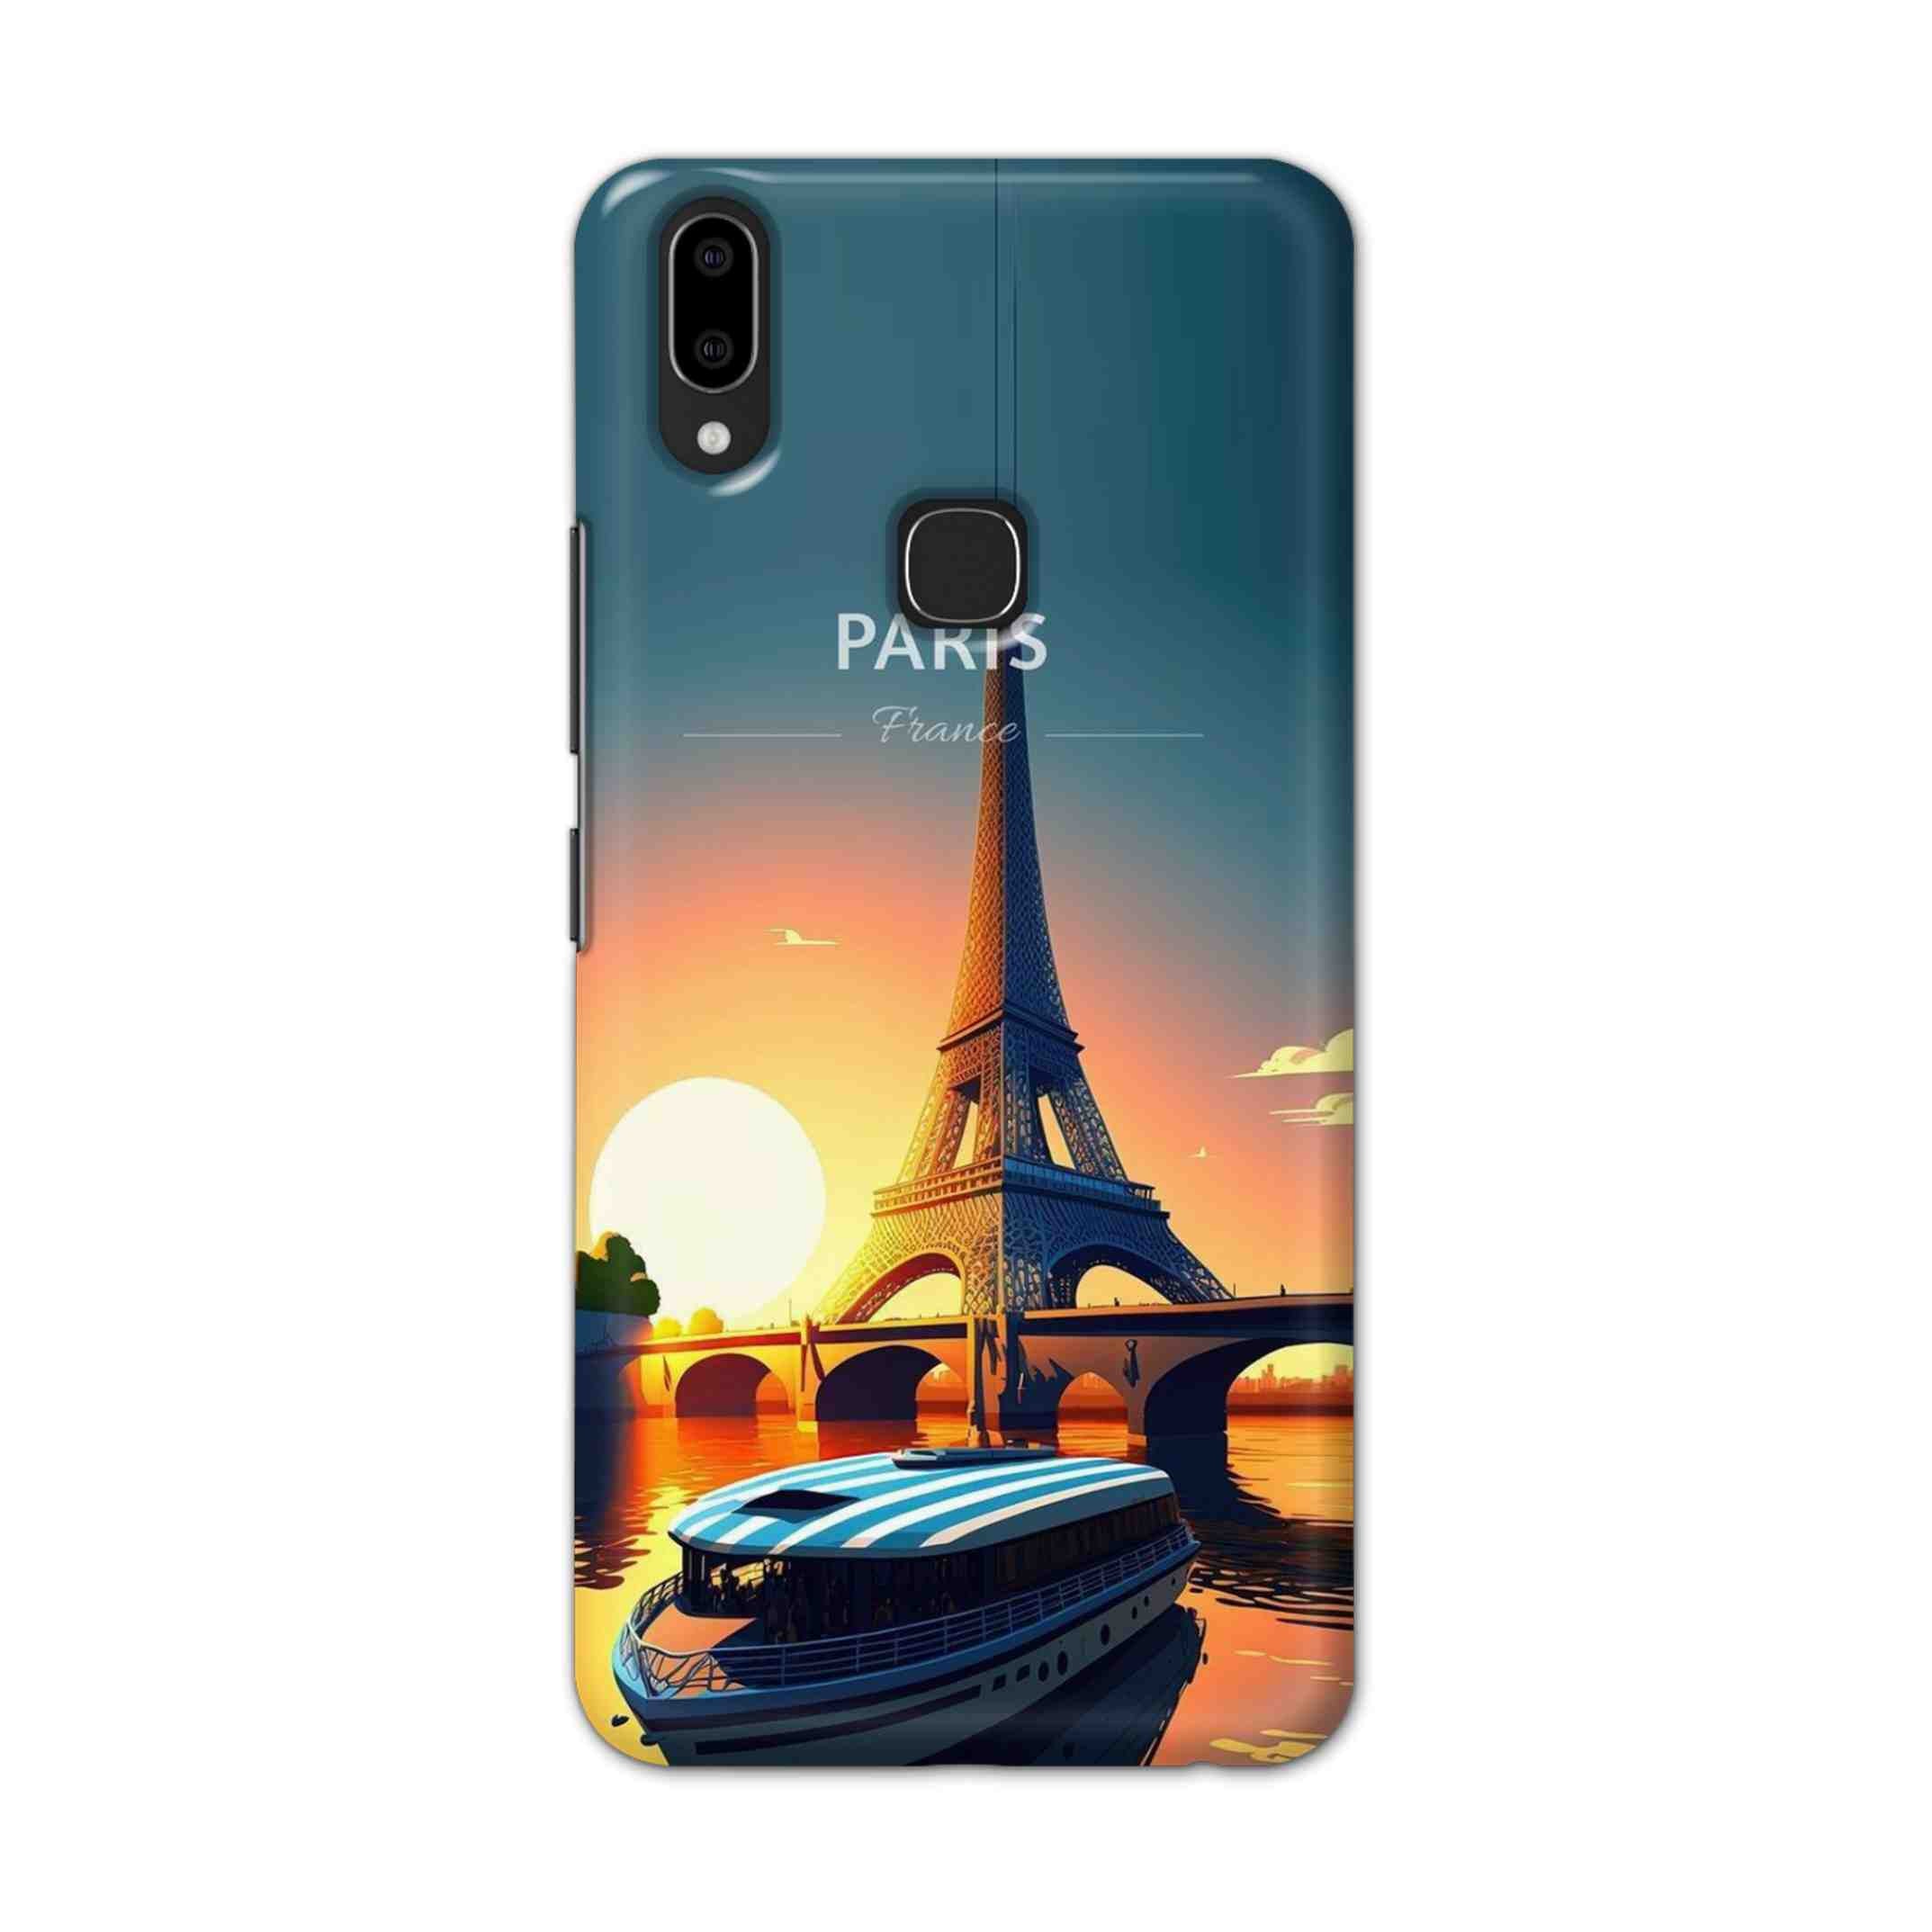 Buy France Hard Back Mobile Phone Case Cover For Vivo V9 / V9 Youth Online